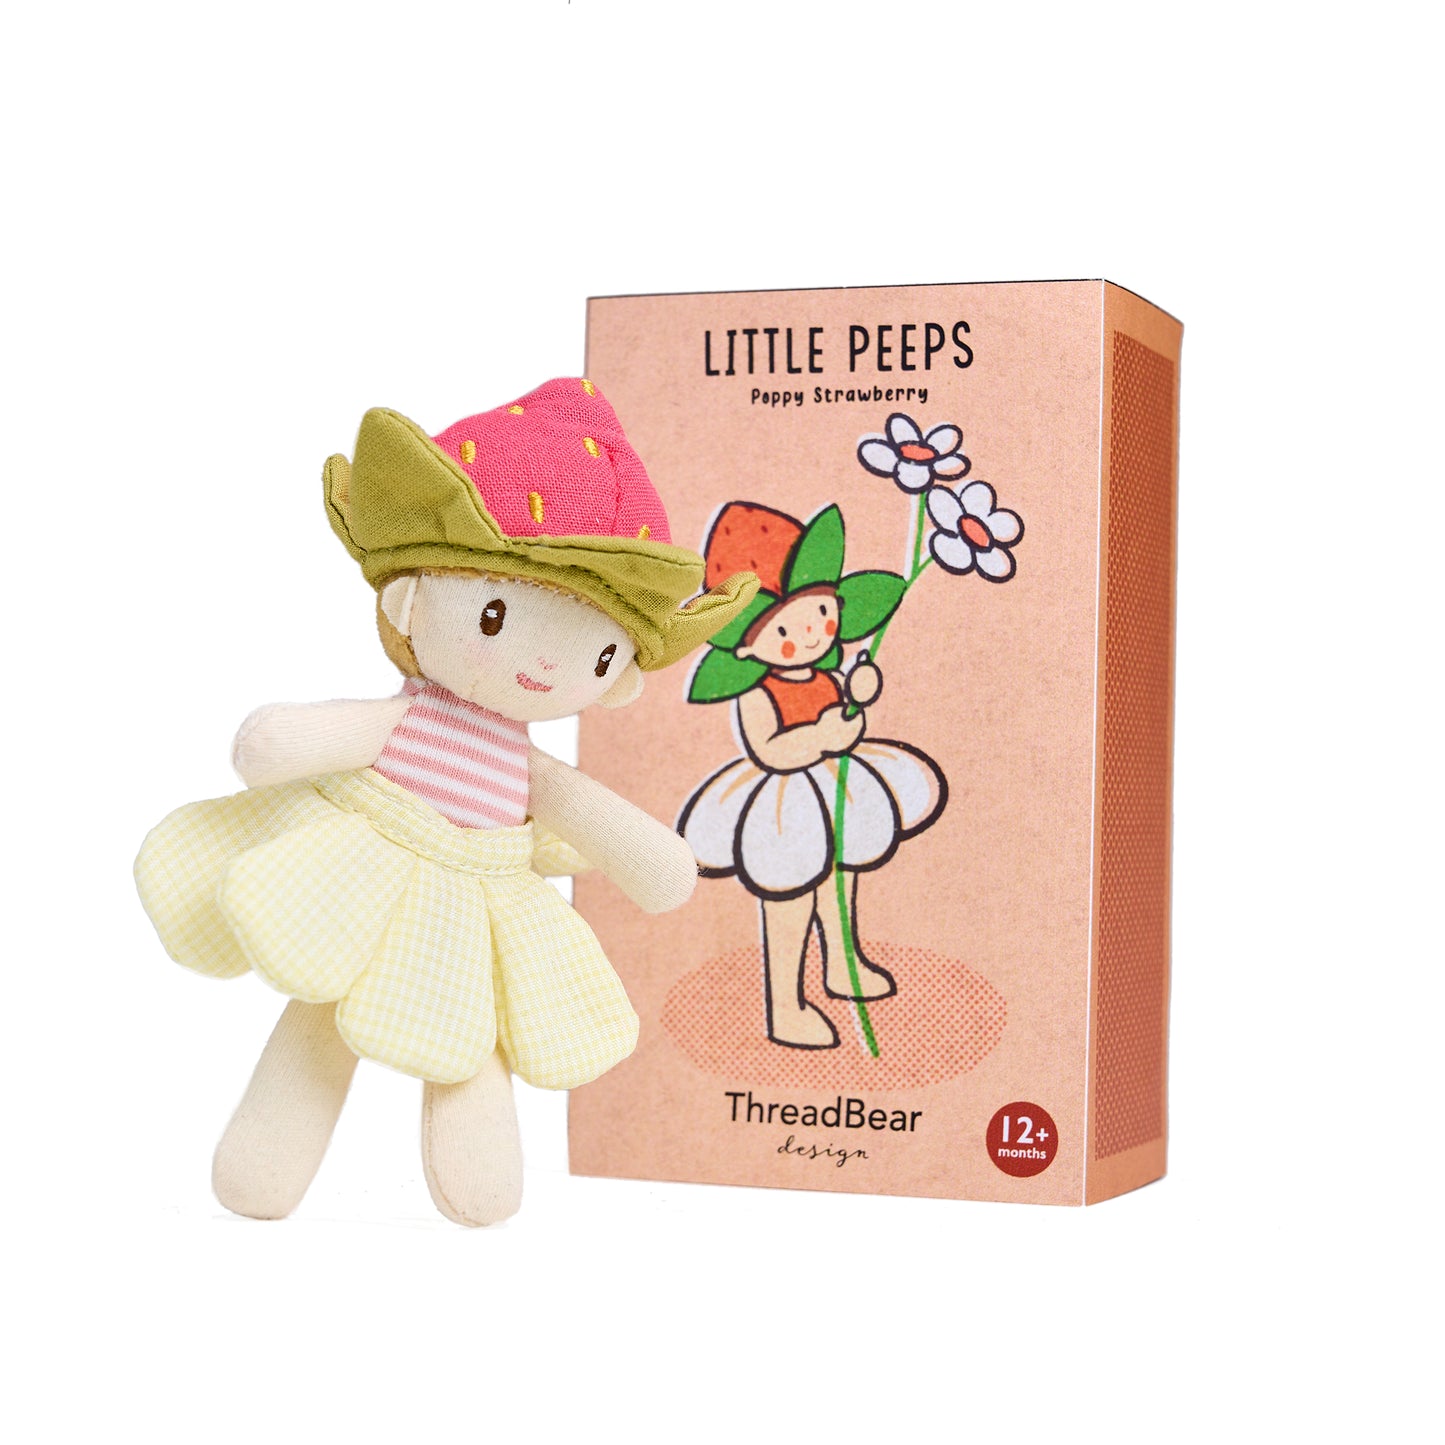 Little Peeps Poppy Strawberry by Threadbear Design